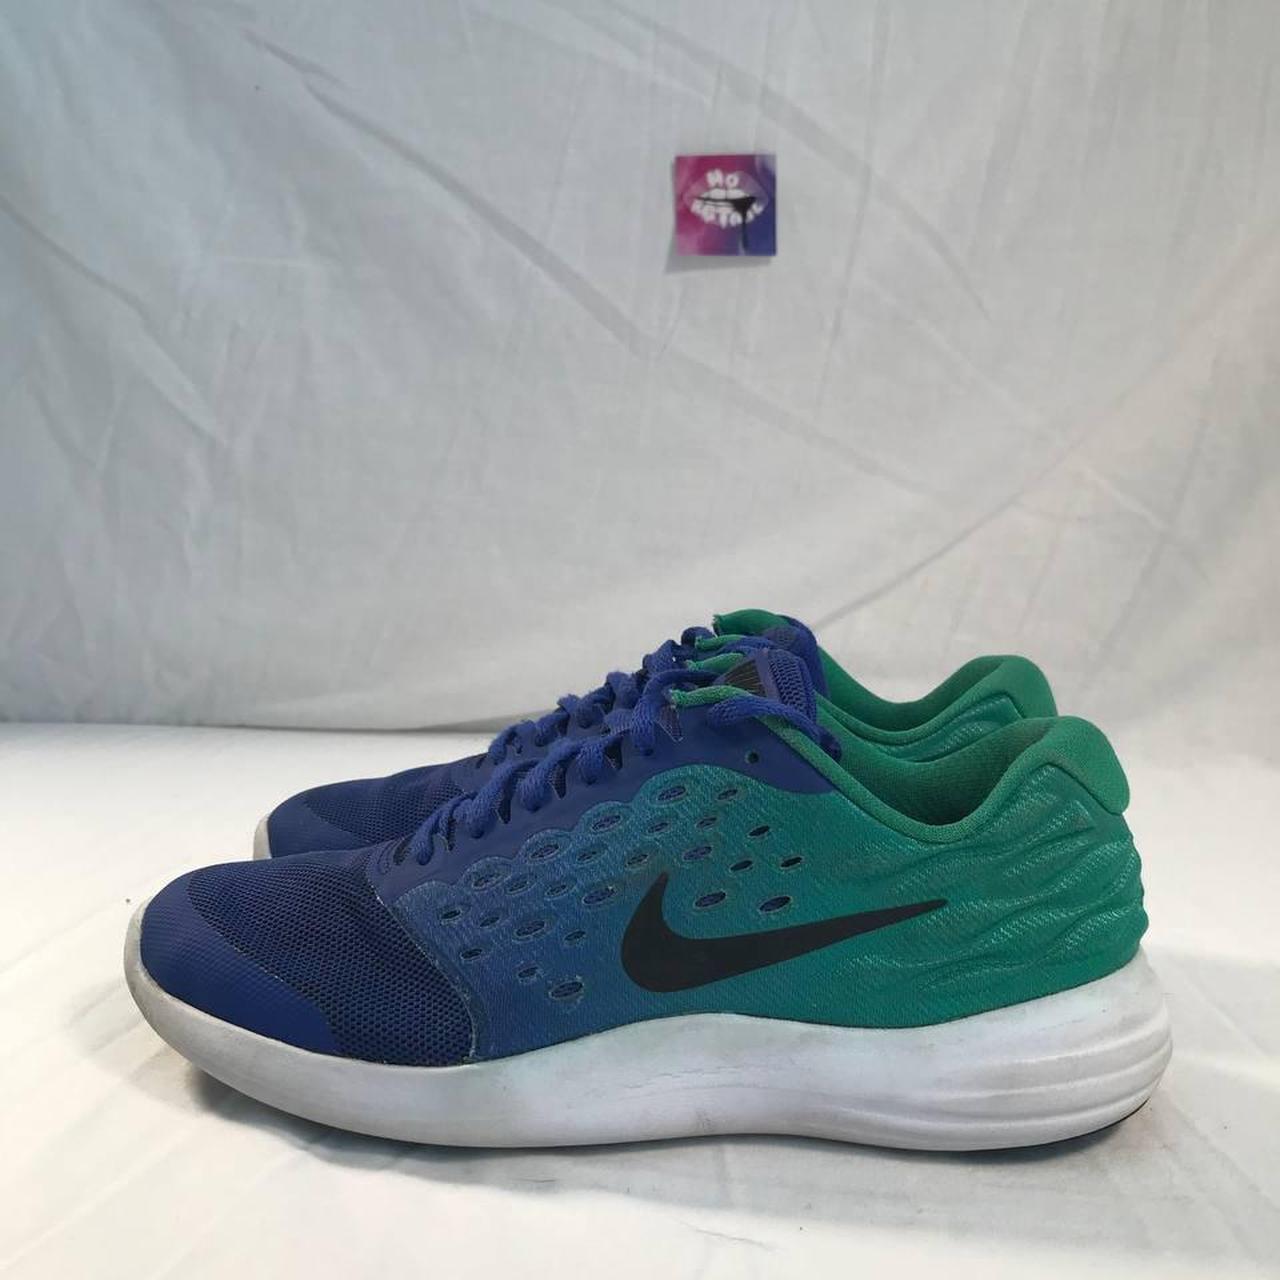 Nike Lunarstelos Running Shoes Size: 7Y or -